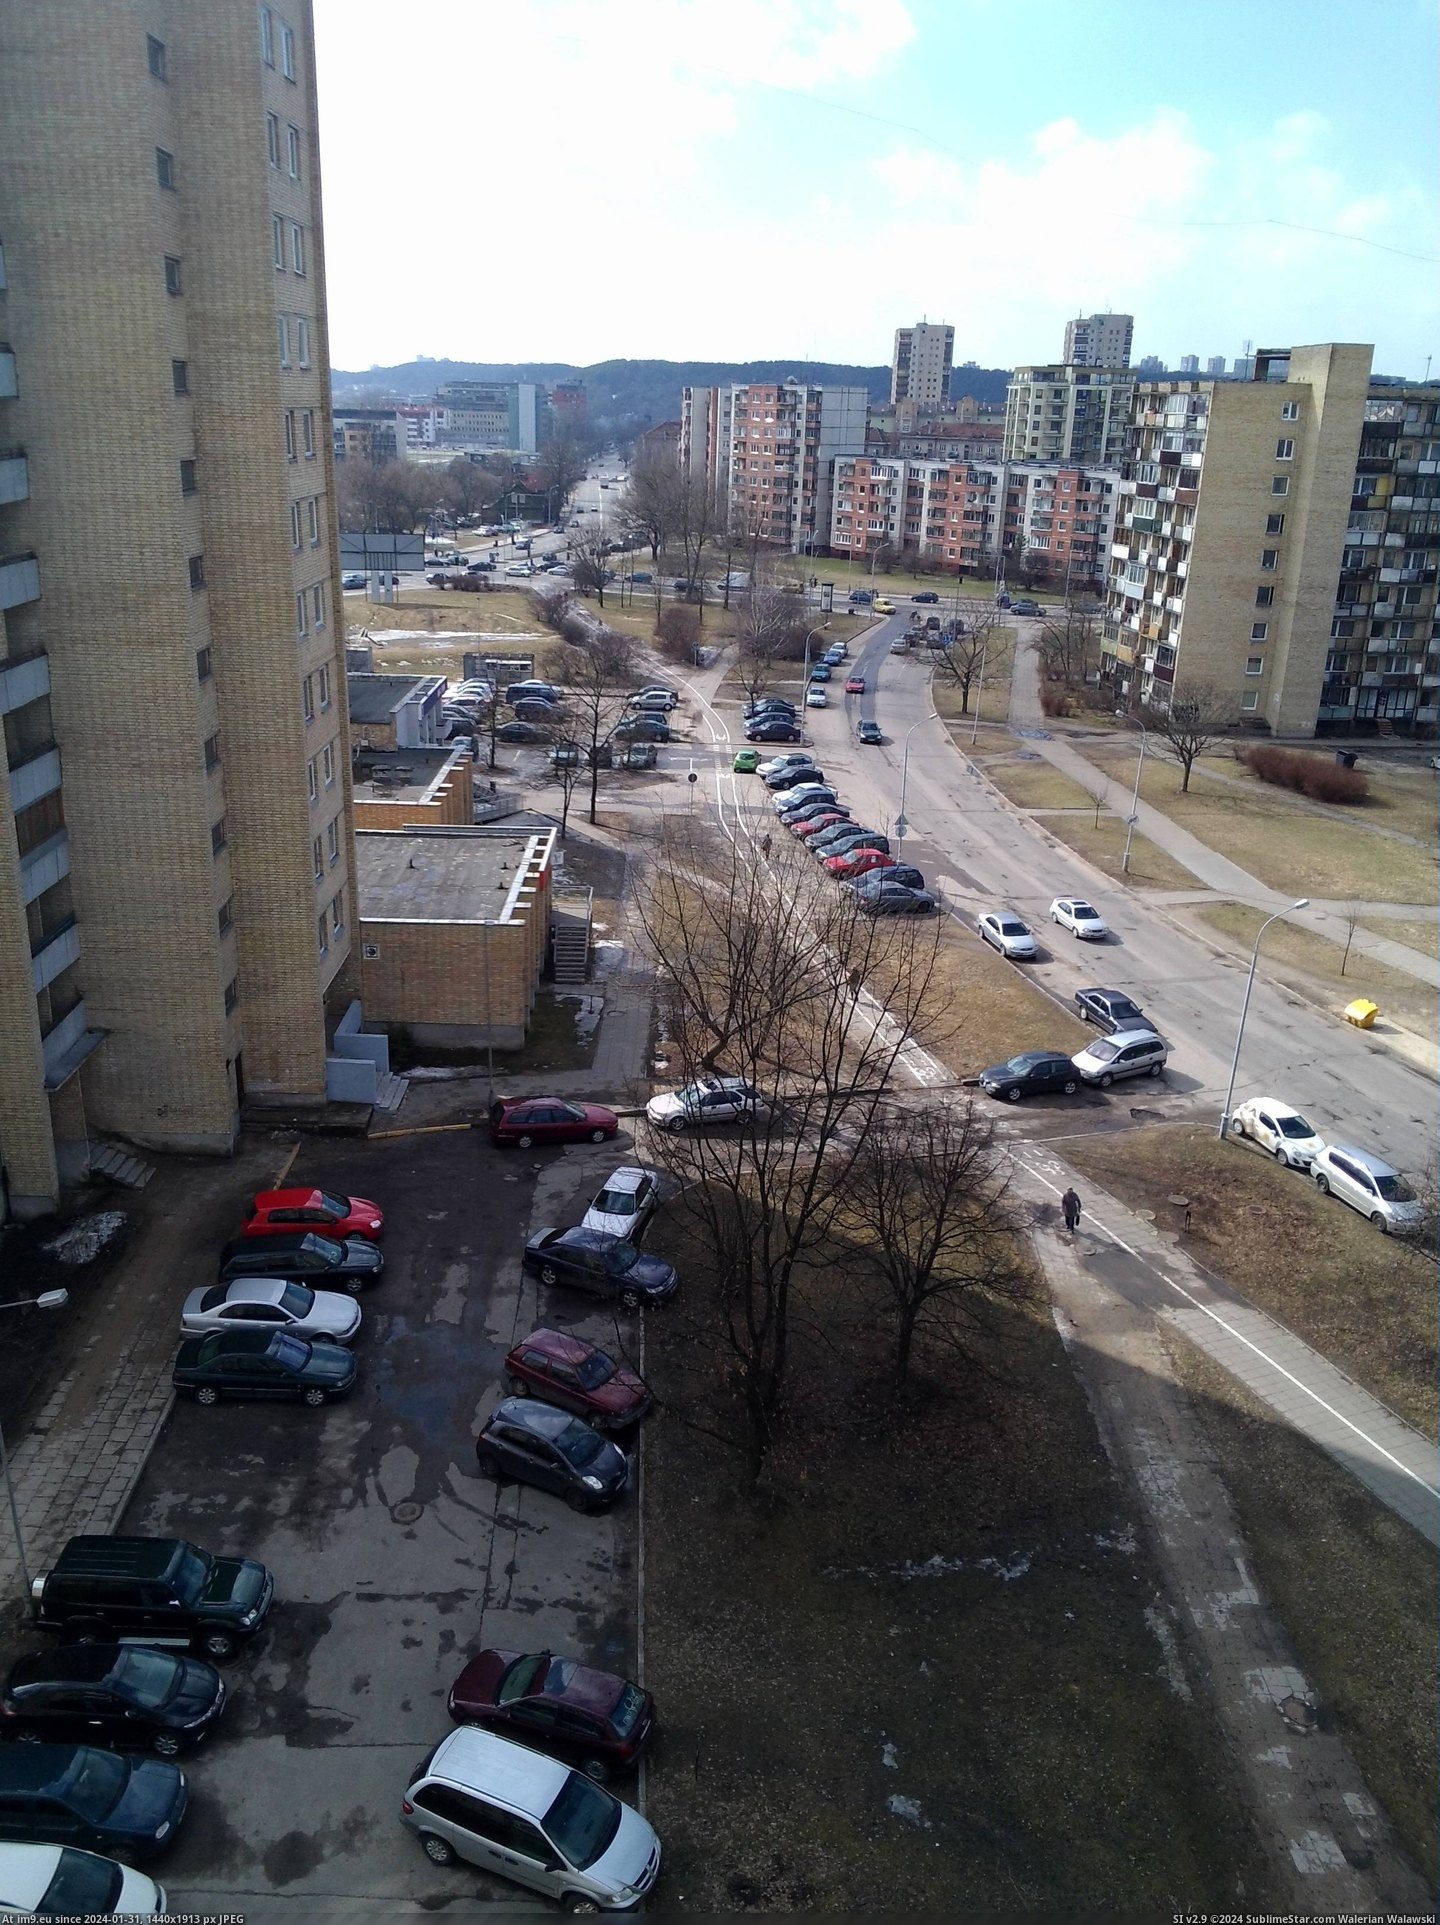  #Vilnius  20130413-1533vilnius Pic. (Bild von album kovas))